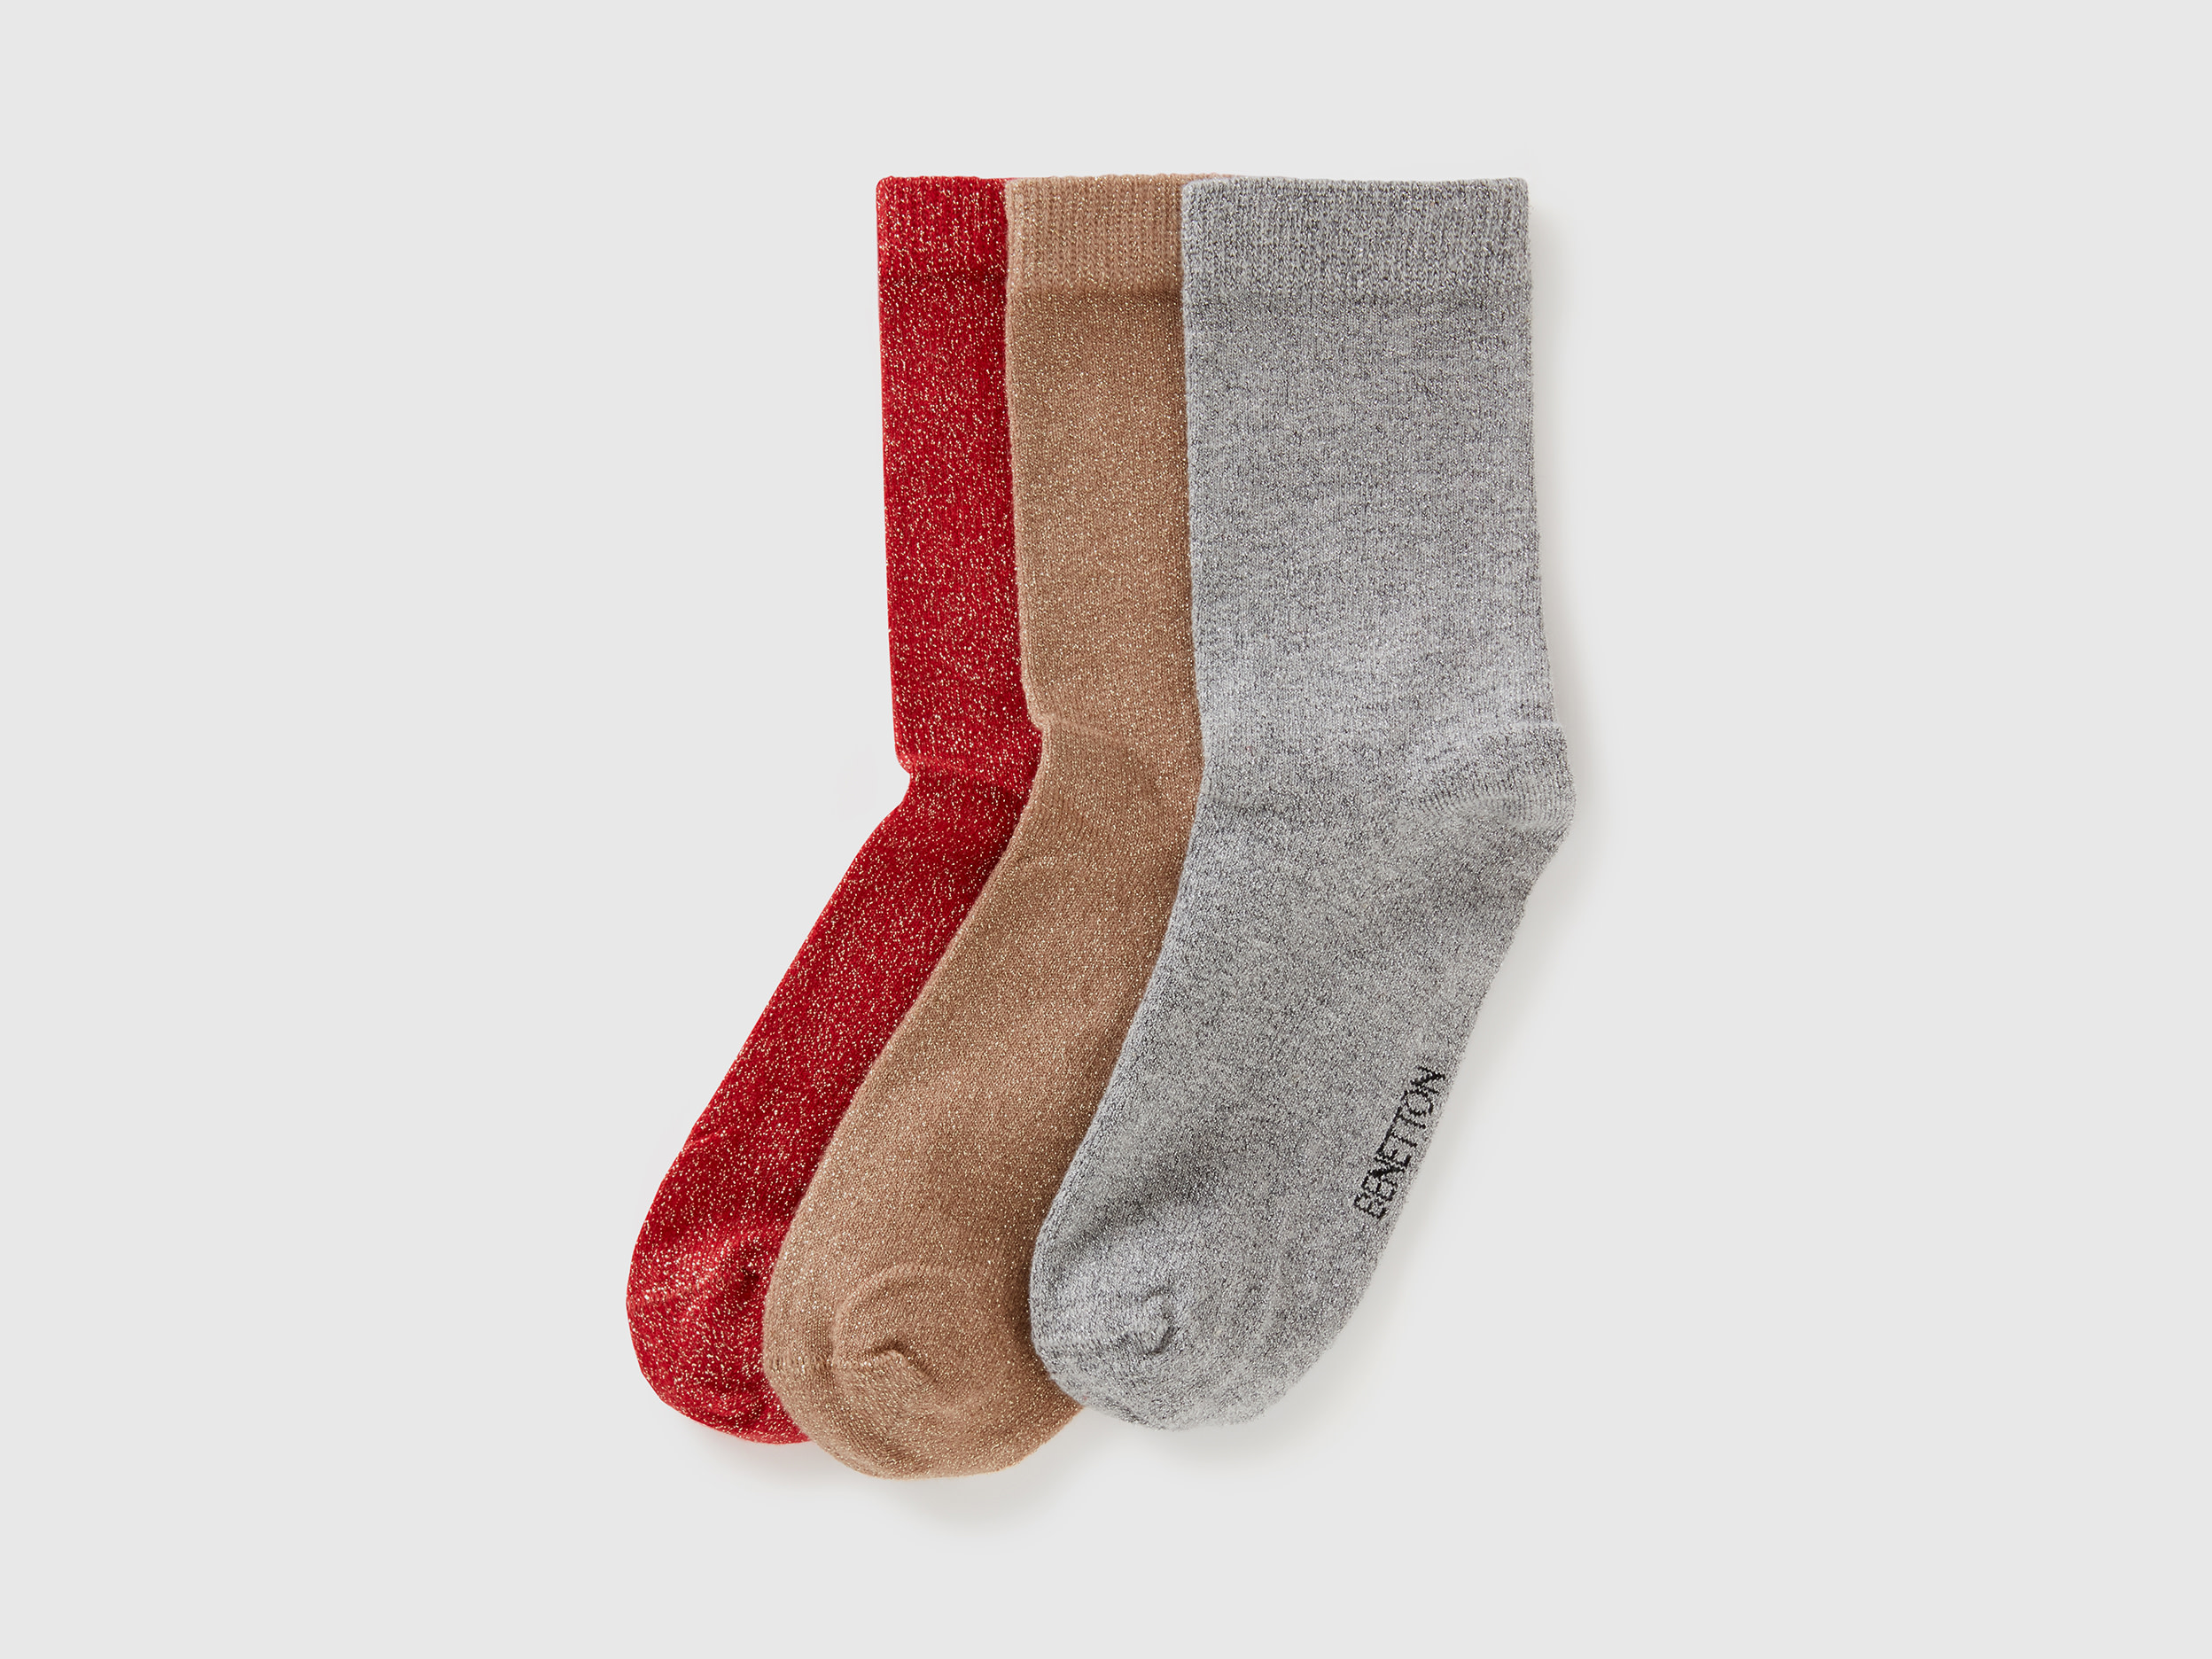 Benetton, Long Socks With Lurex, size 5-8, Multi-color, Kids